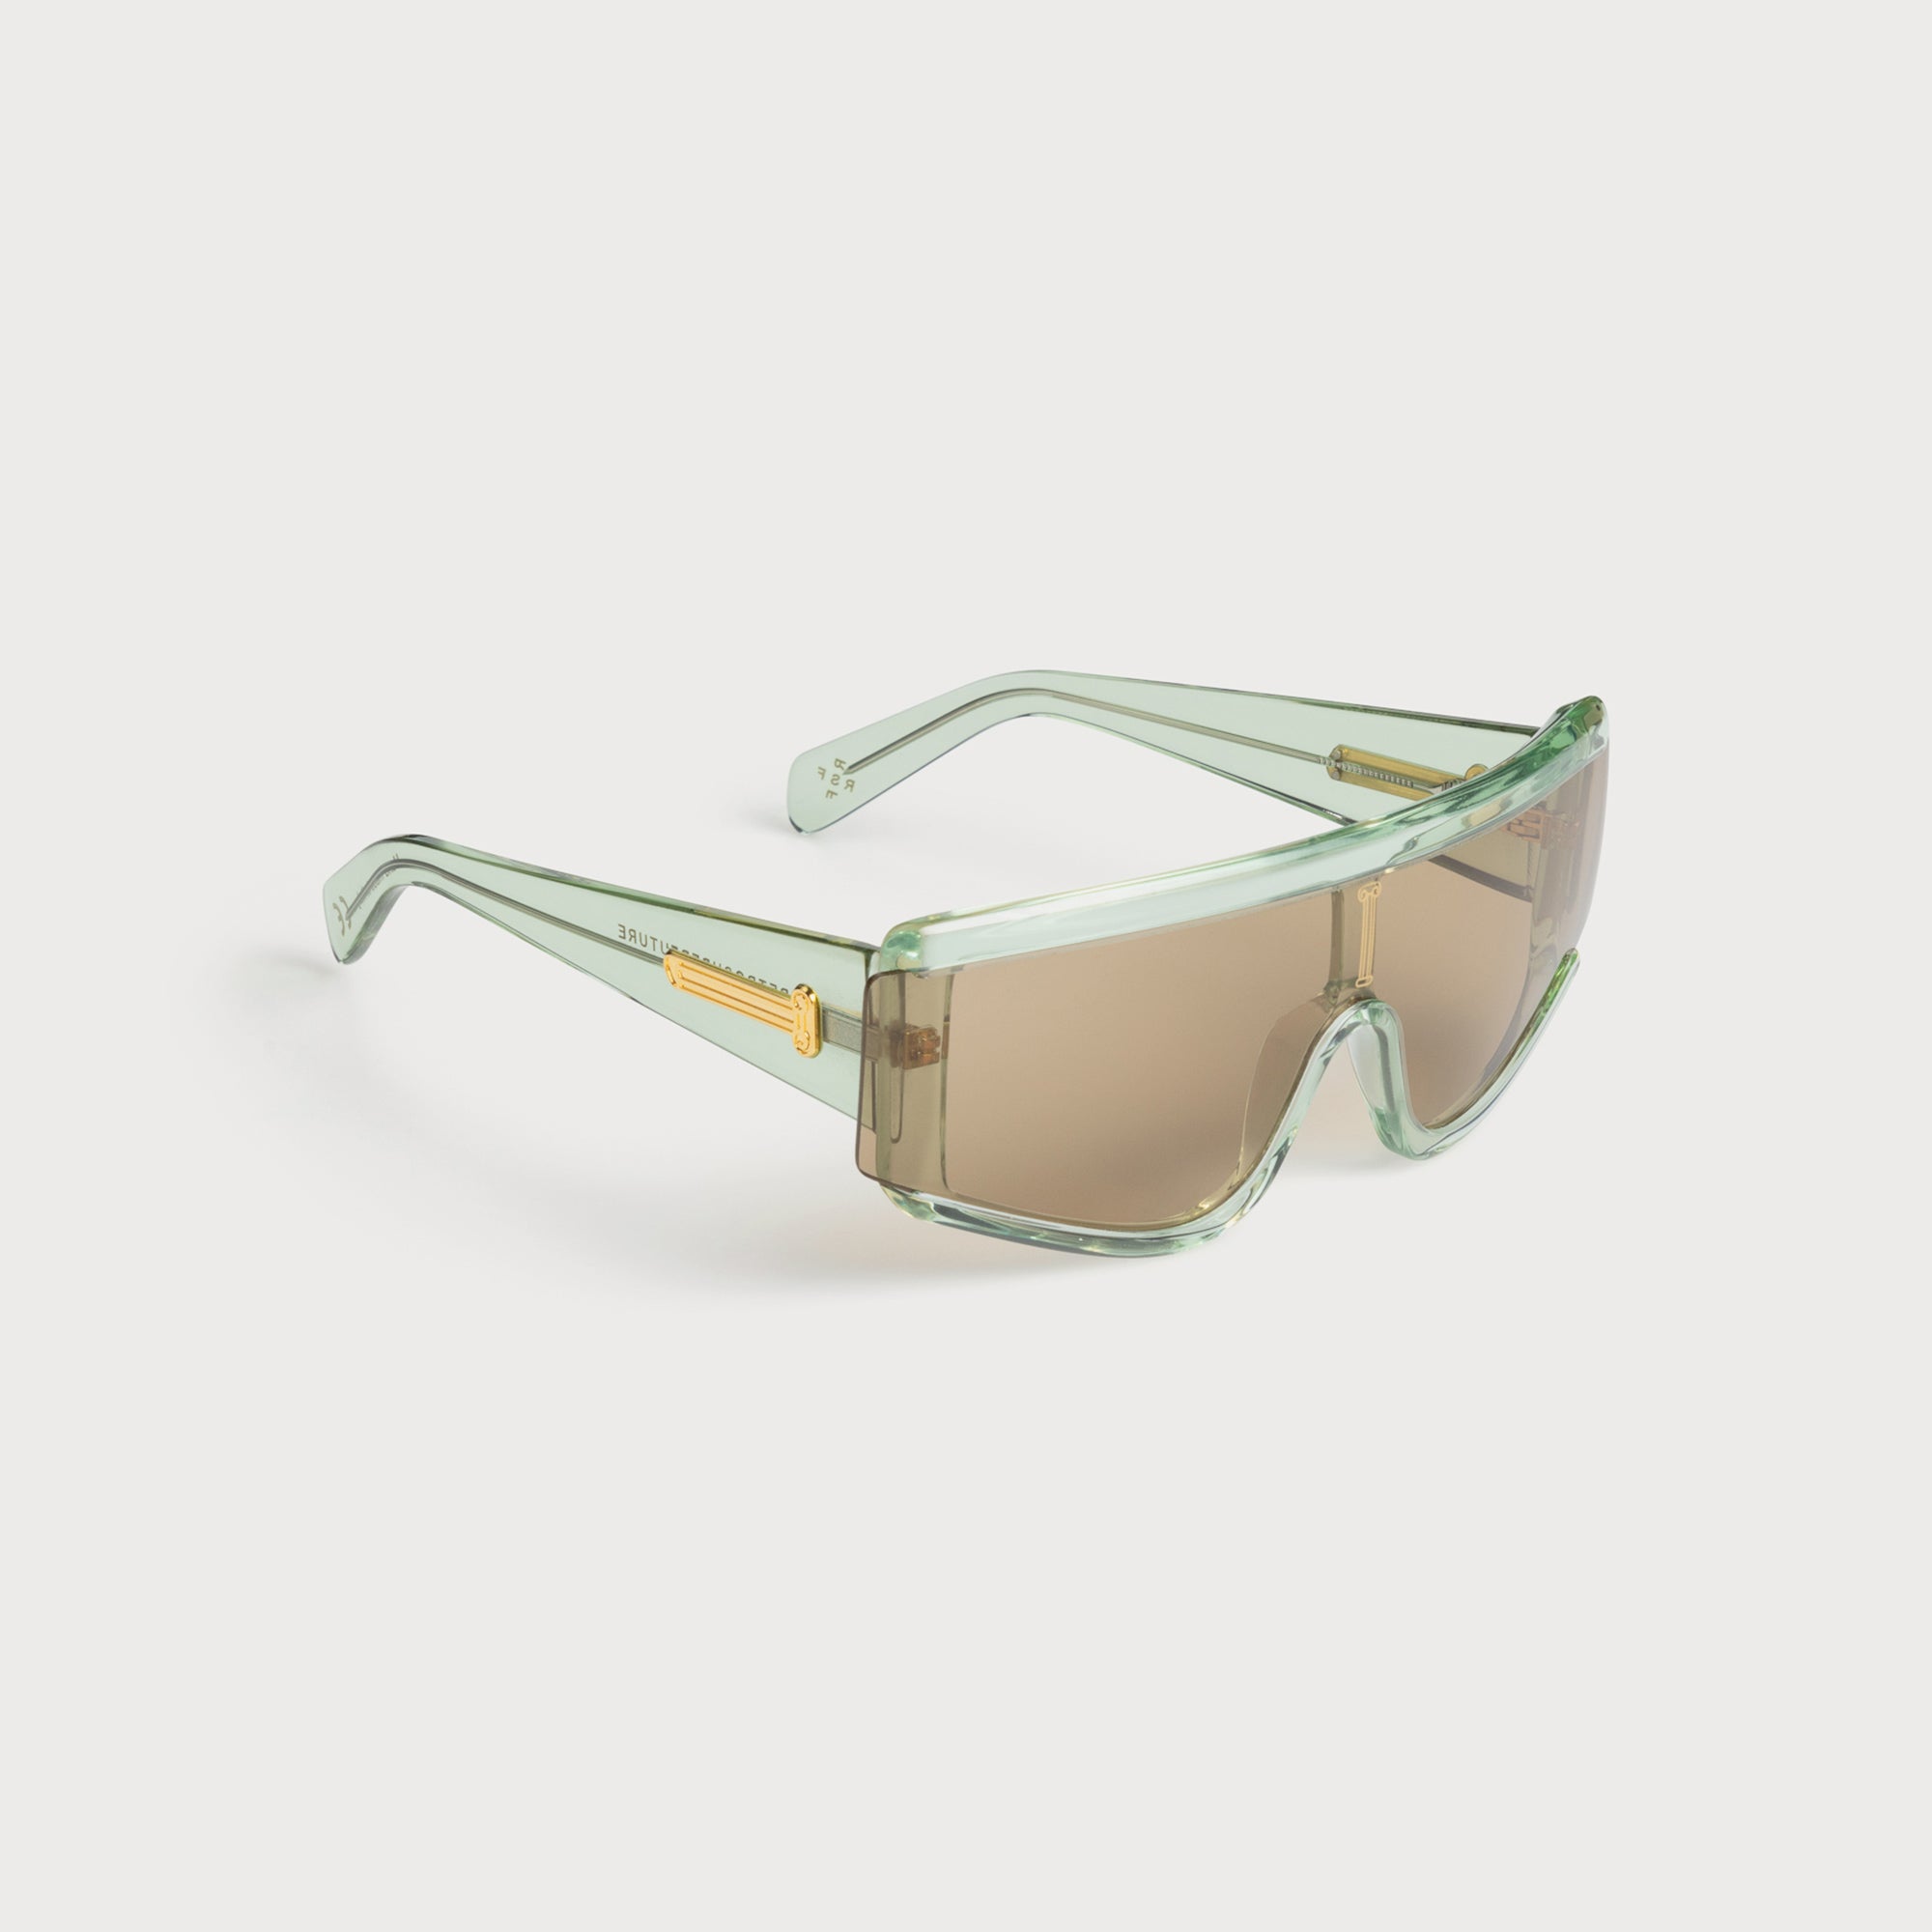 Close detail photo of the Zed Sunglasses - Aqua.